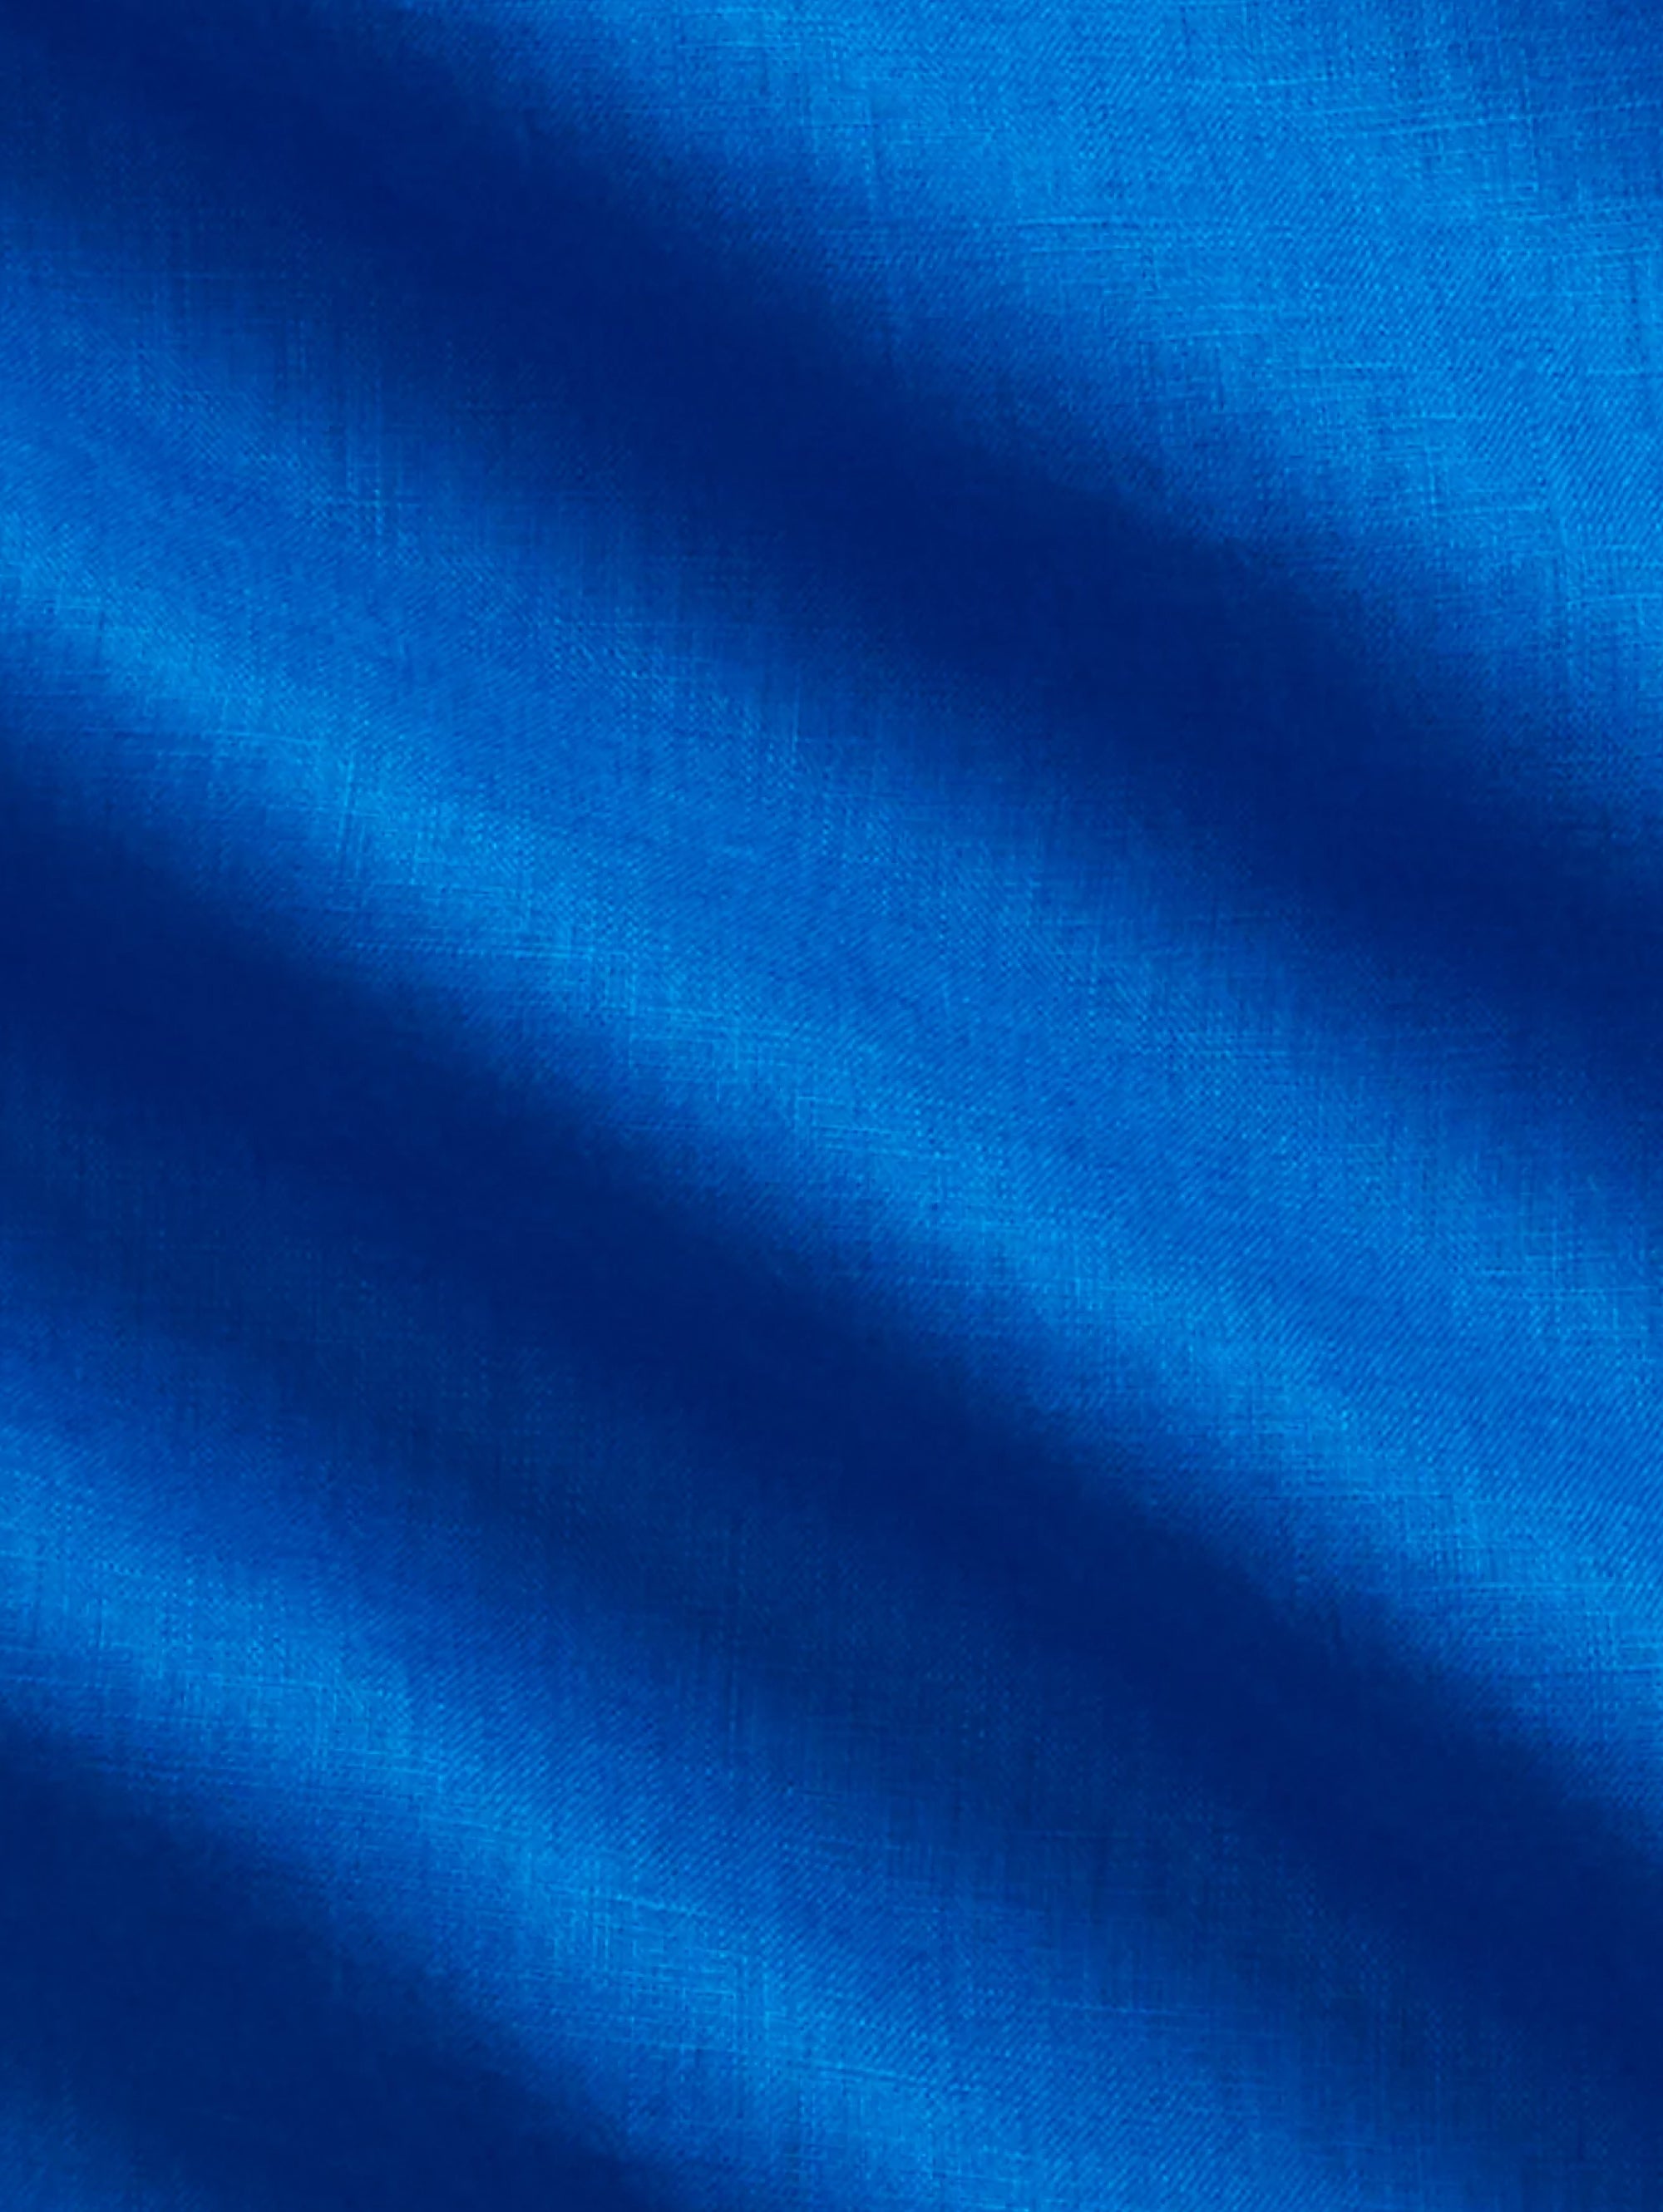 Blaues Slim-Fit-Leinenhemd